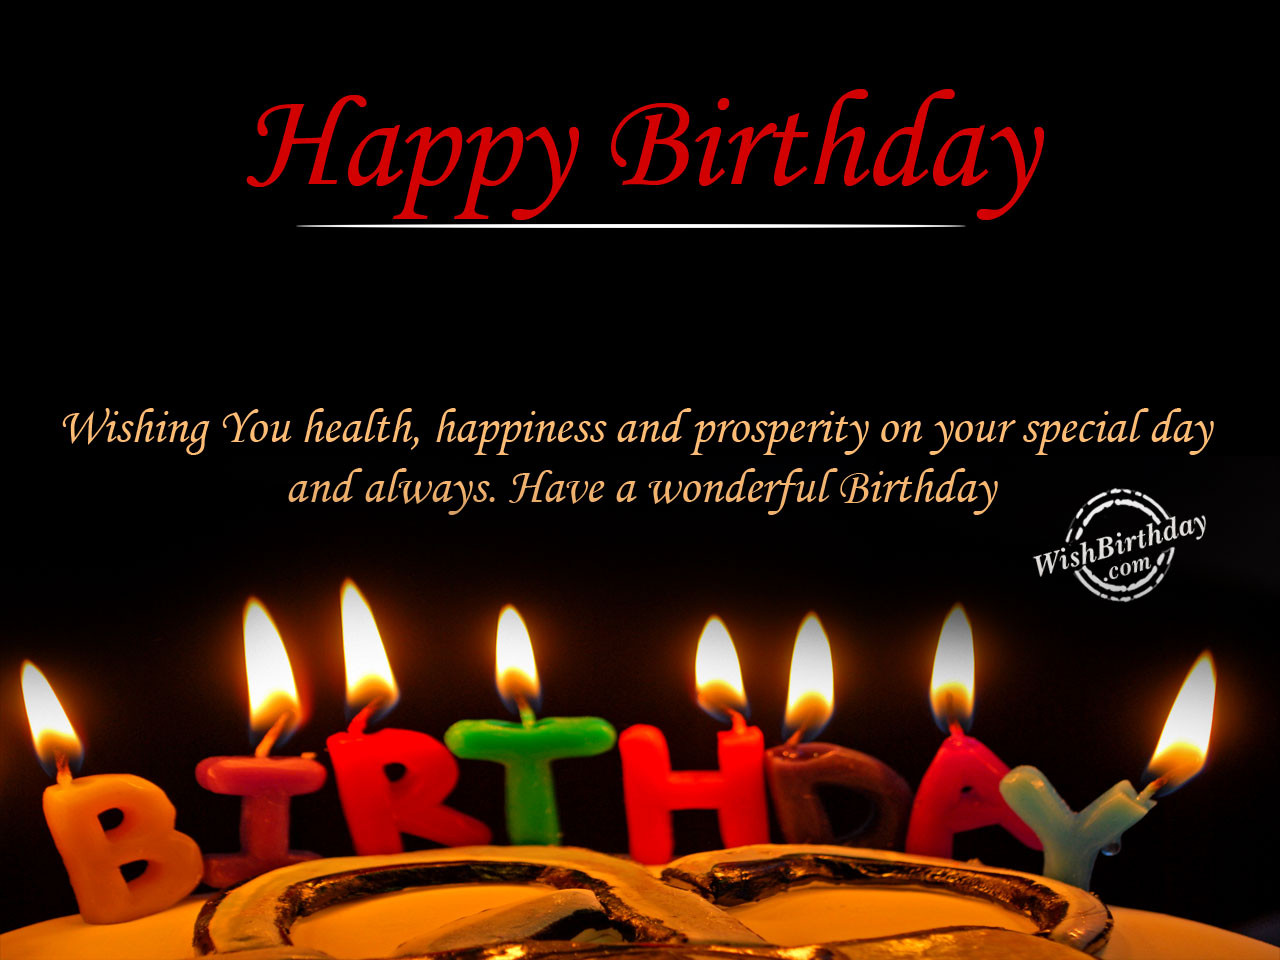 Wonderful Birthday Wishes
 Have a wonderful Birthday WishBirthday